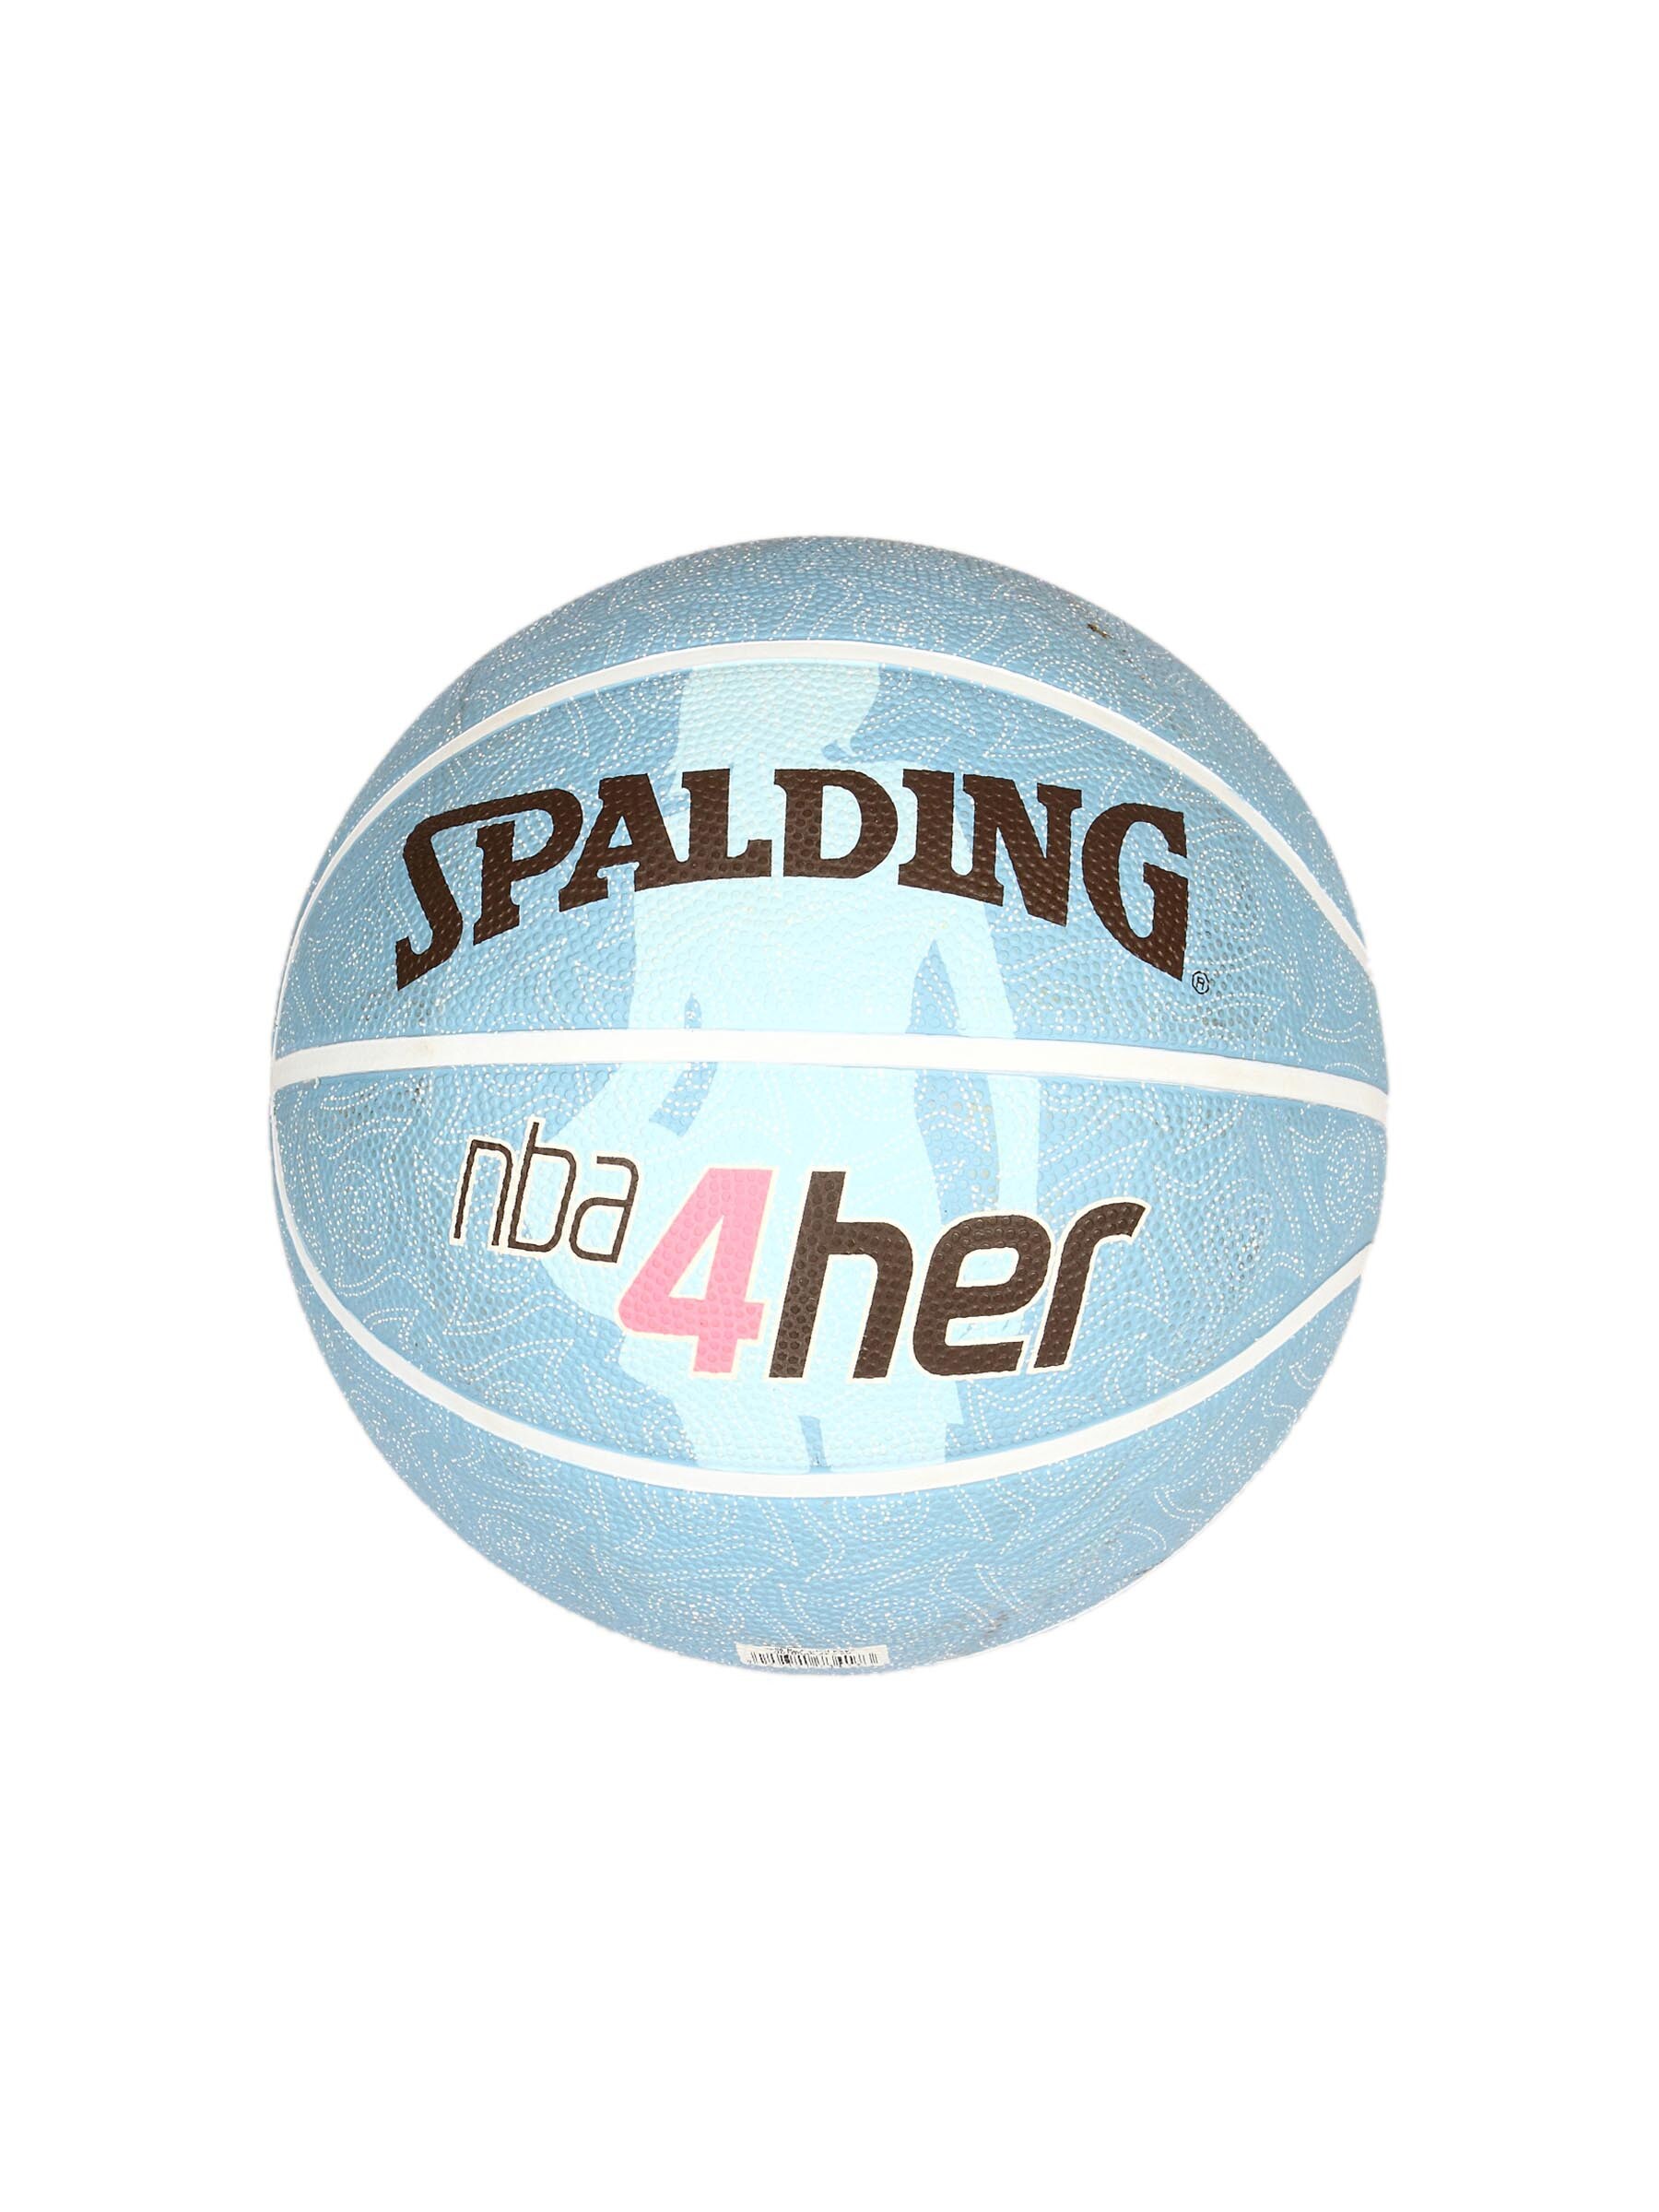 Spalding Blue Basketball